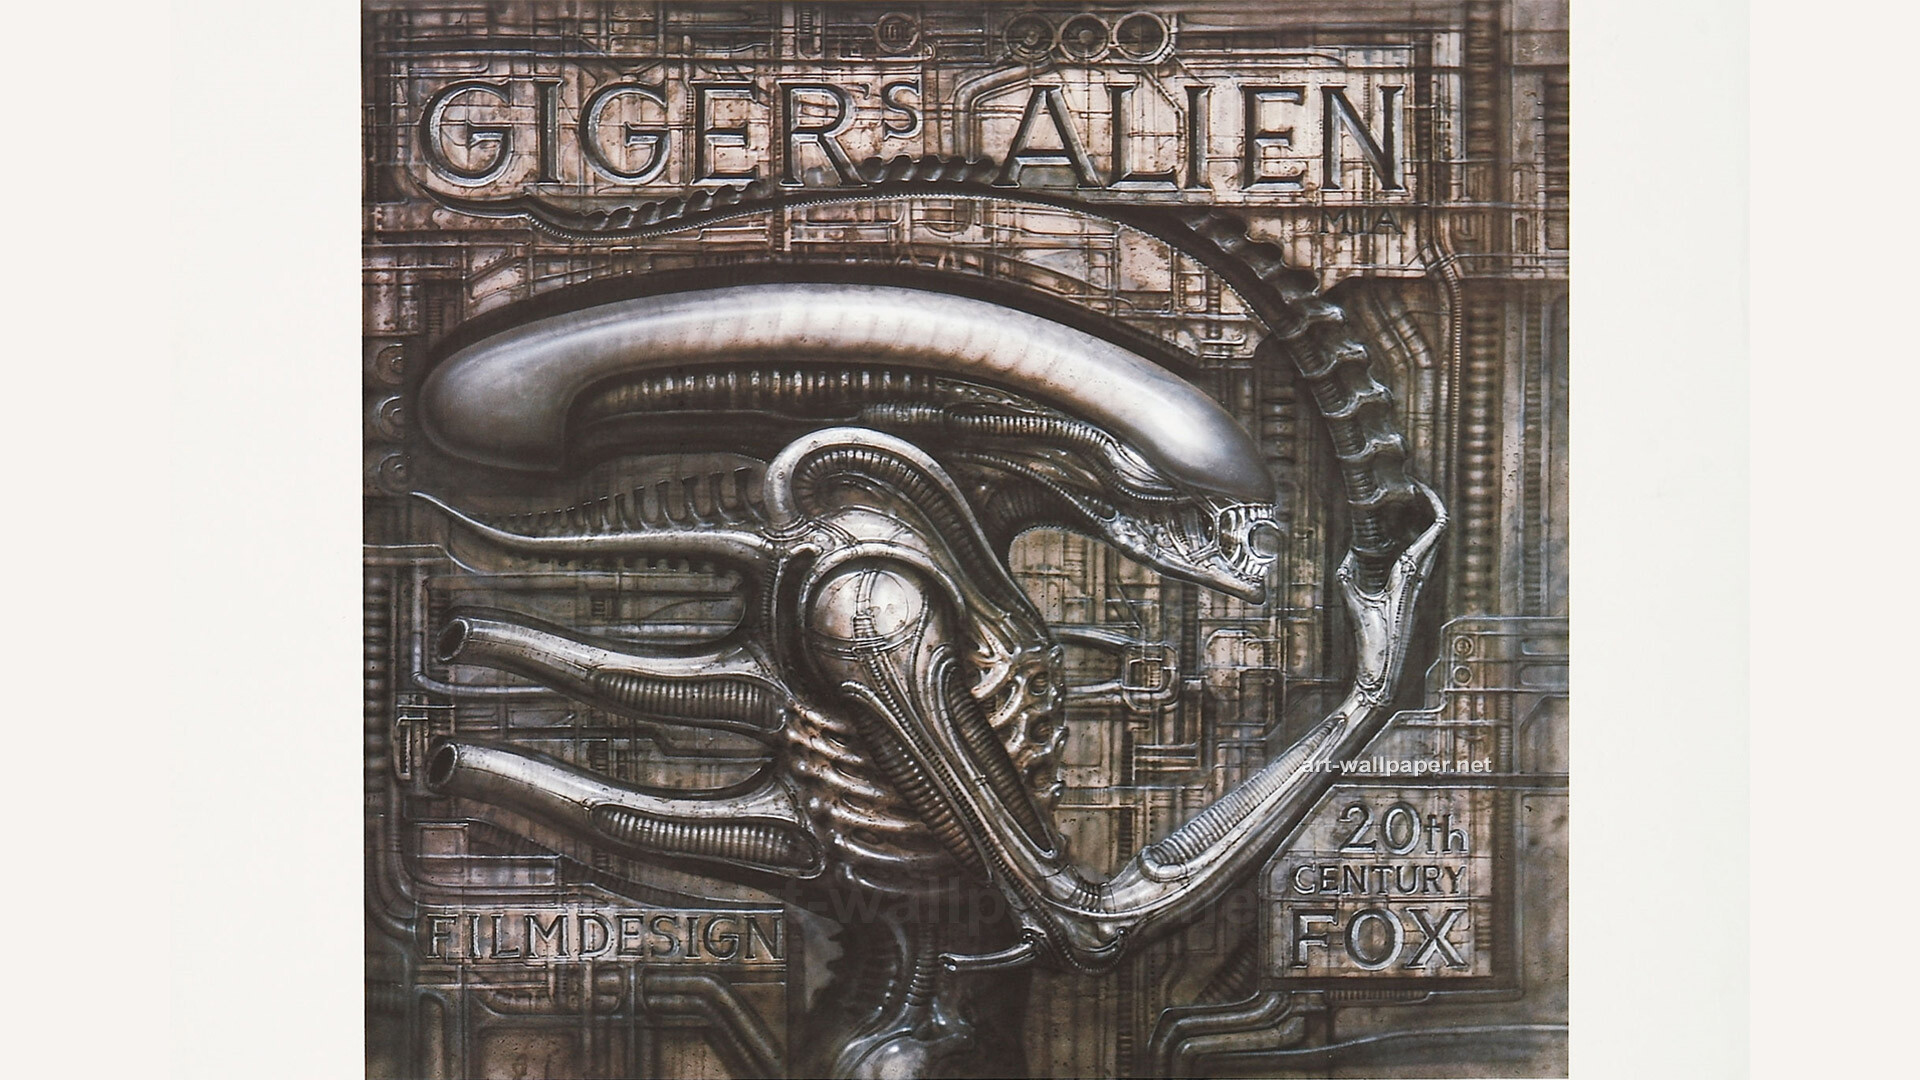 H.R. Giger: Xenomorph, Filmdesign, "Alien" Movie Poster, 20th Century Fox. 1920x1080 Full HD Background.